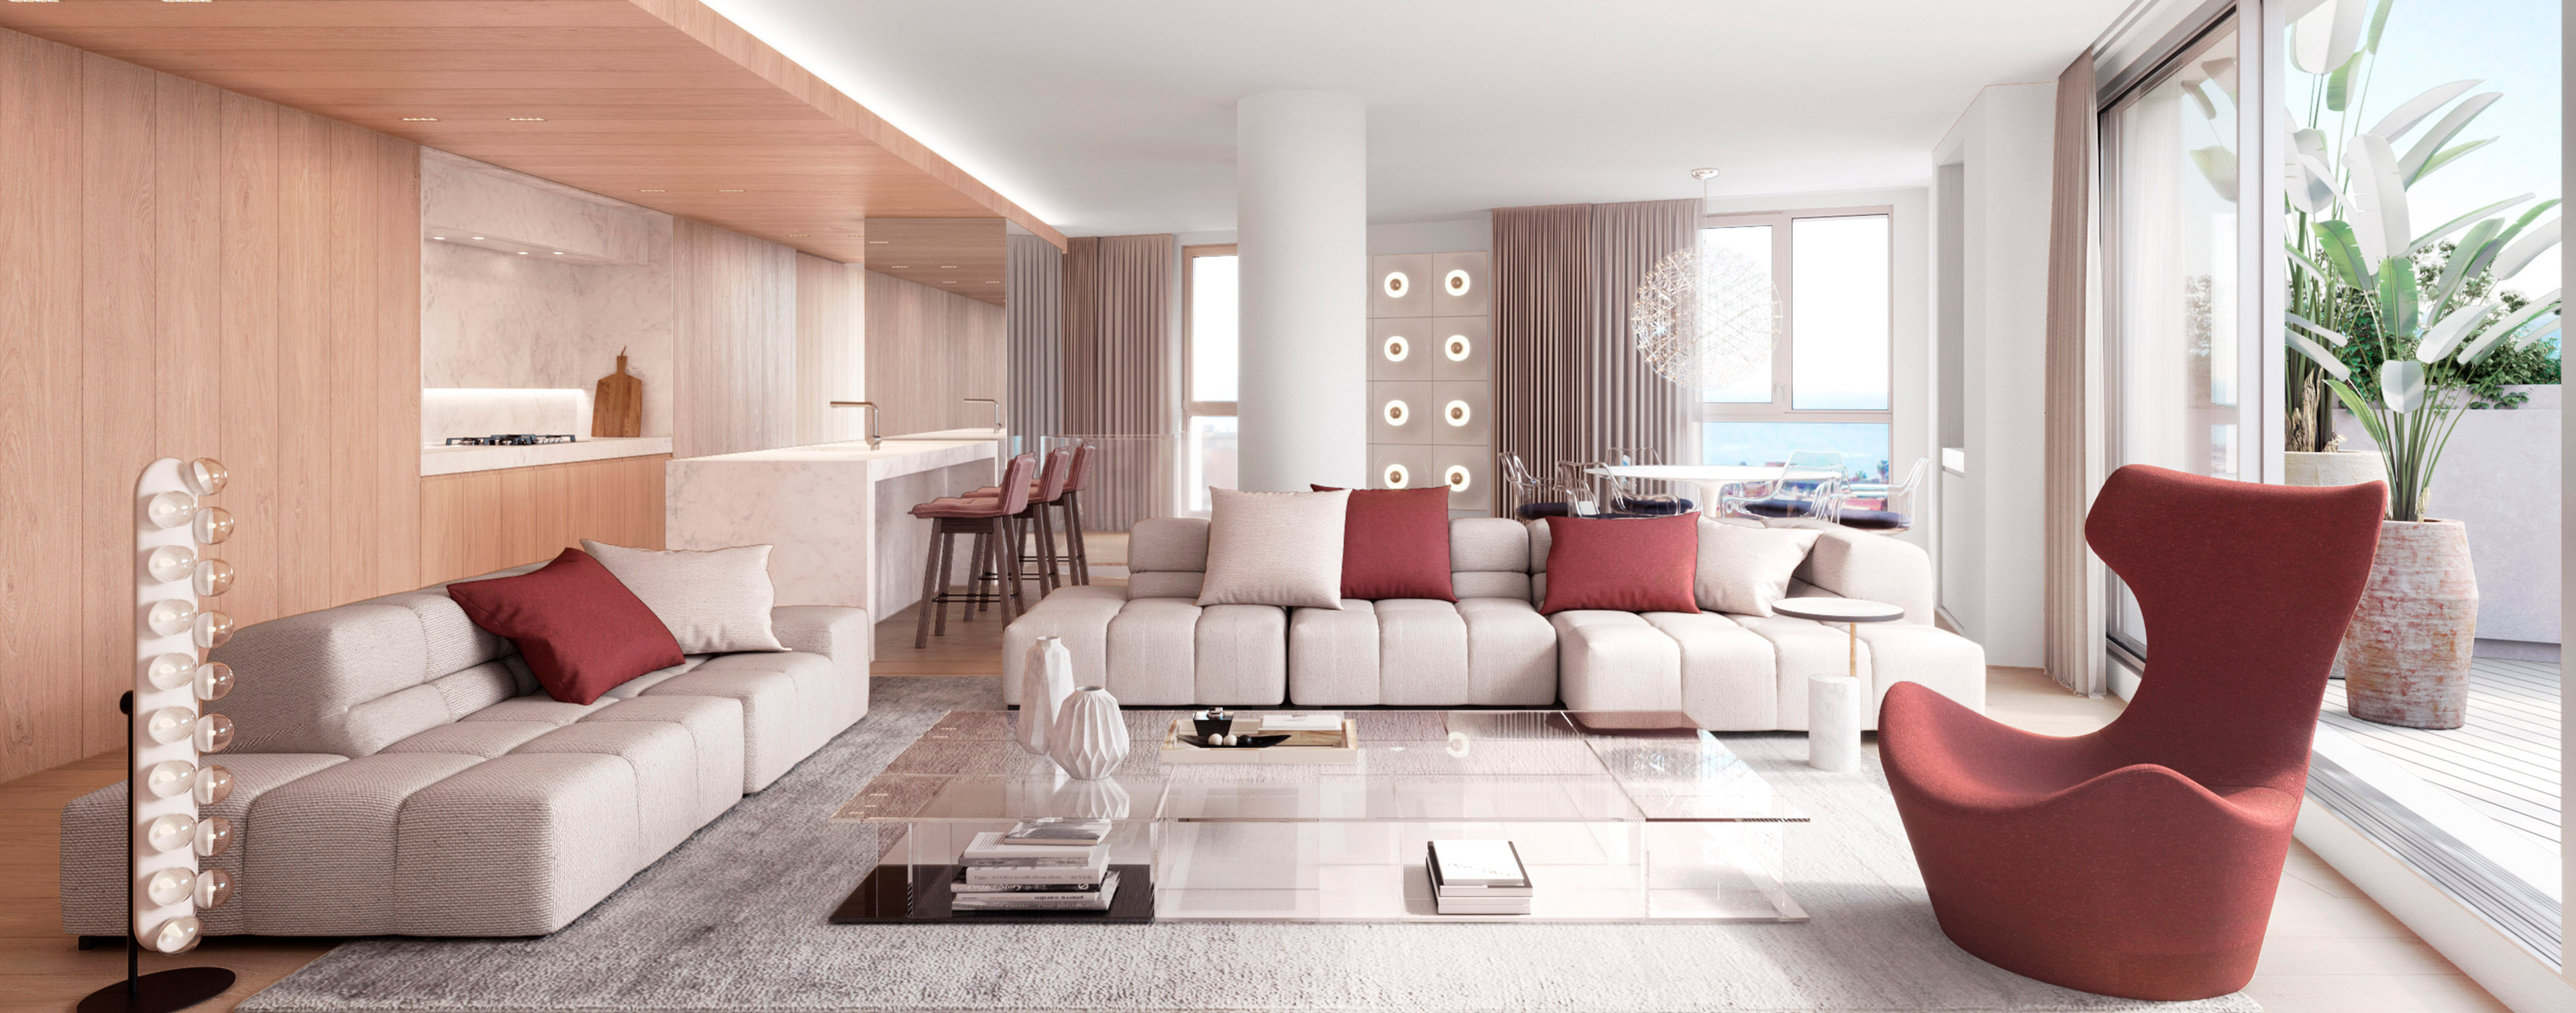 luv studio luxury architects barcelona dr aiguader penthouse IMG 01 - LUV Studio - Architecture et design - Barcelone